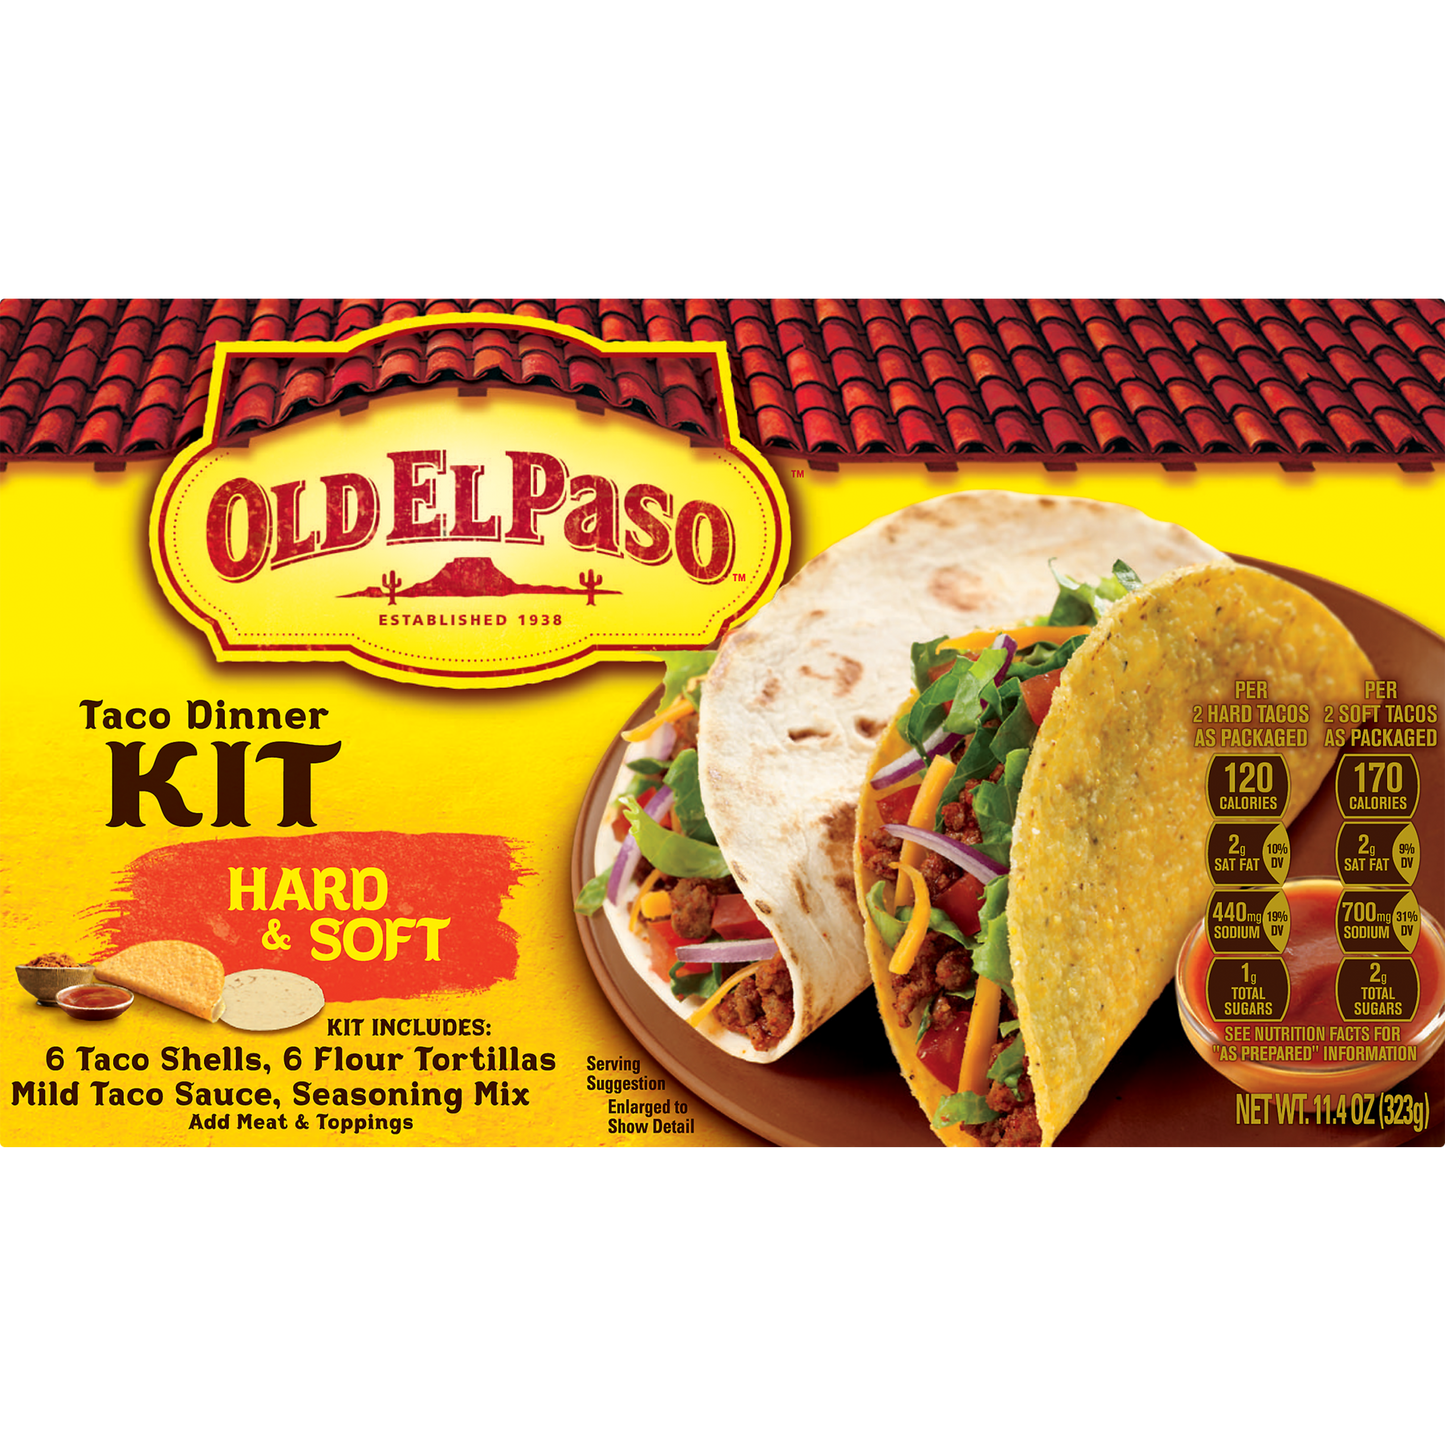 Old El Paso Hard and Soft Taco Dinner Kit, 11.4 oz